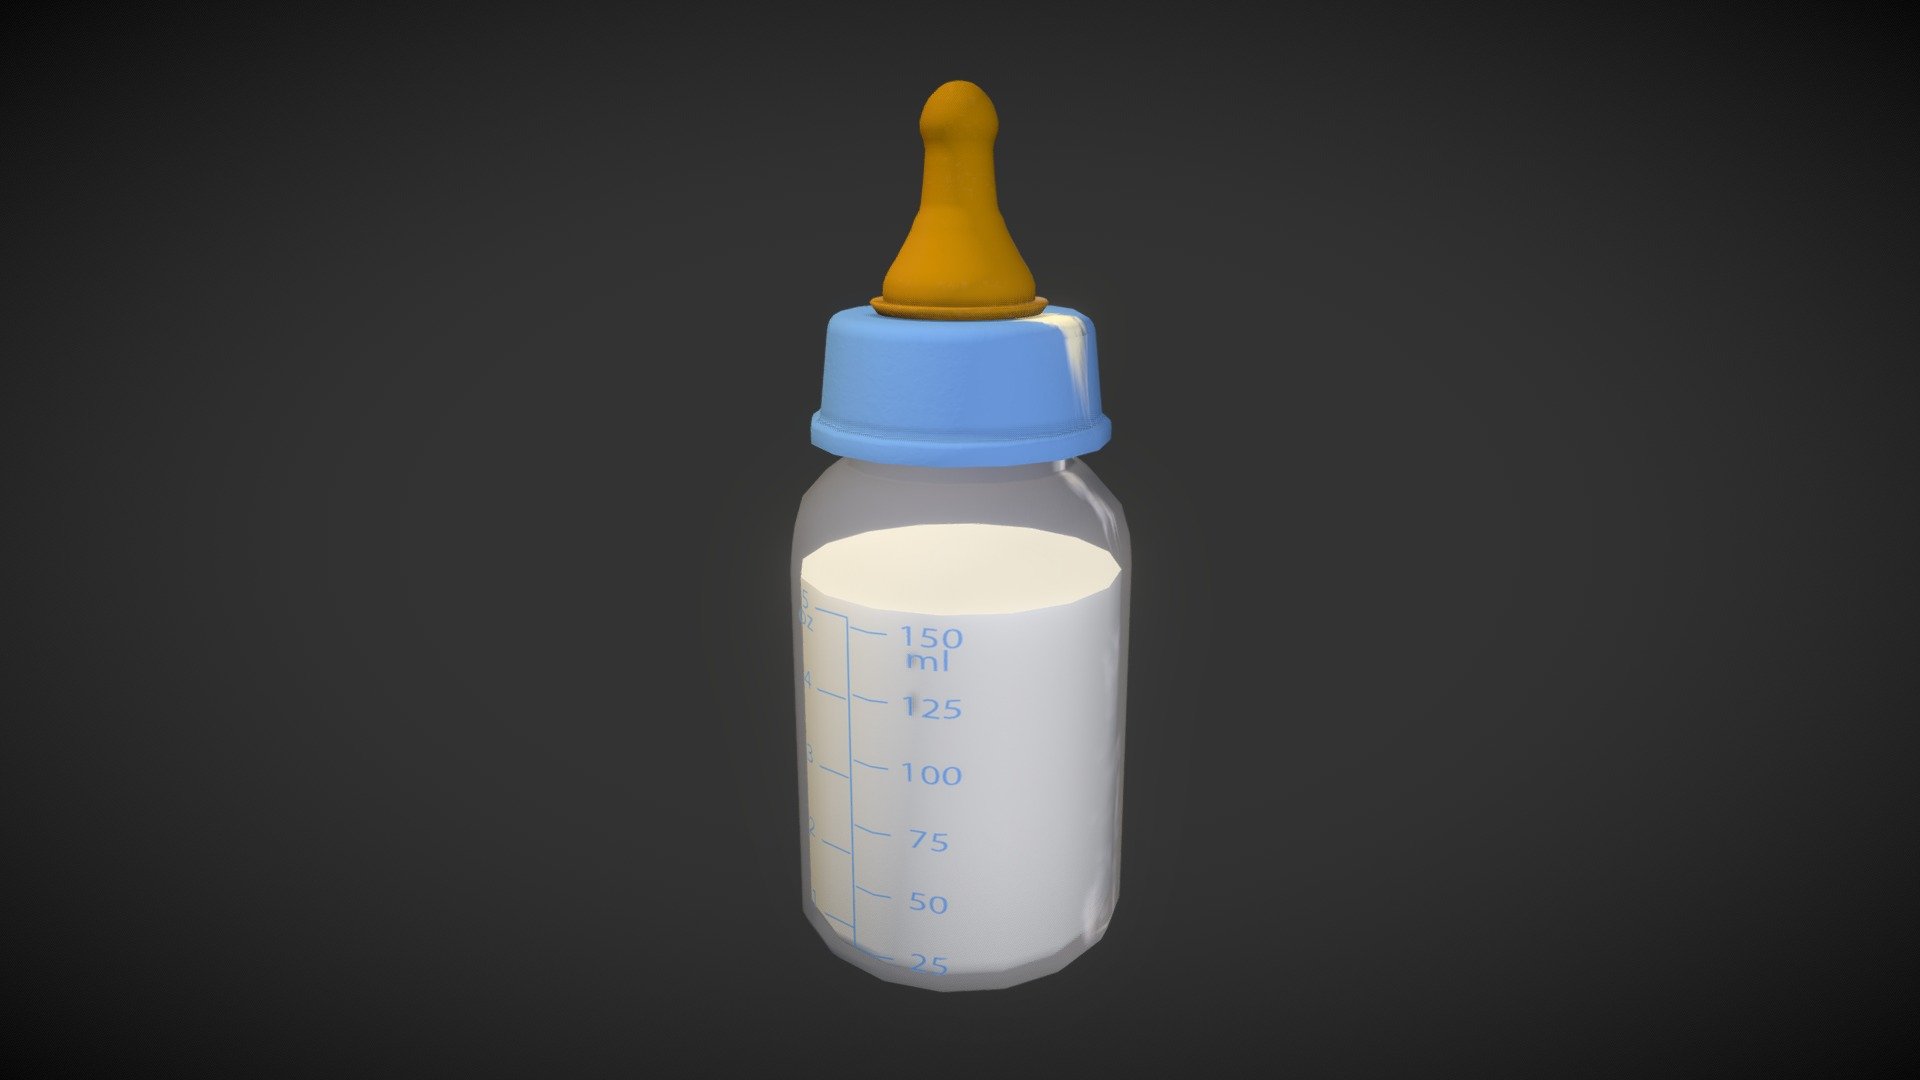 baby bottle